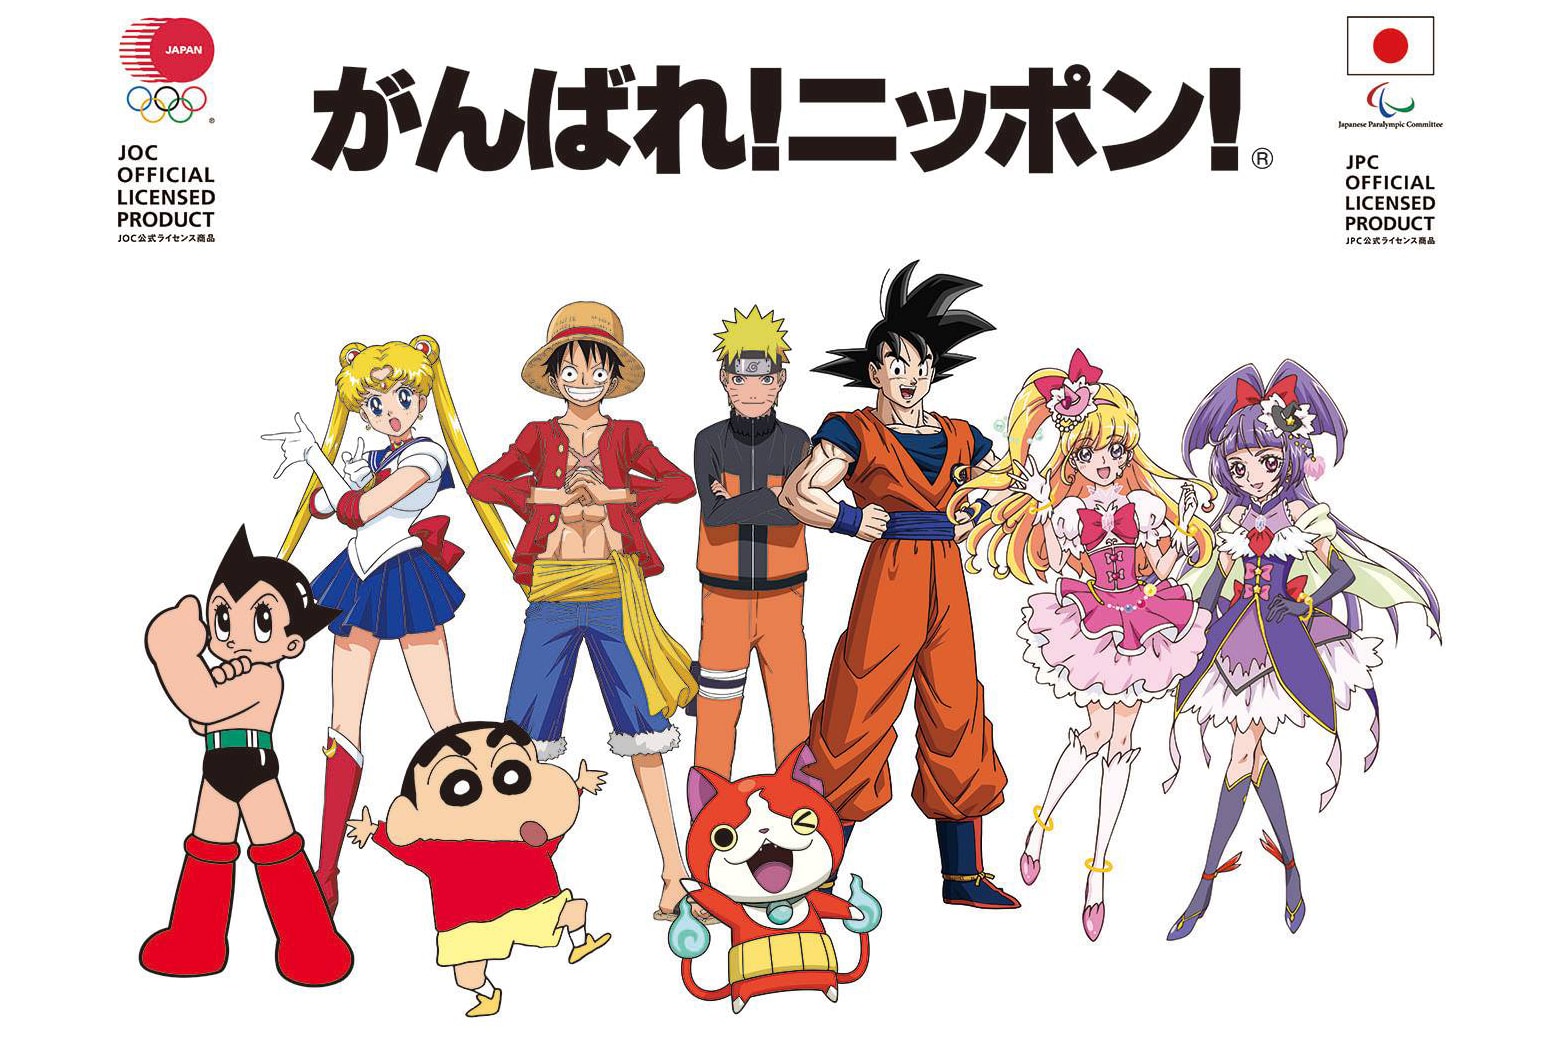 2020 tokyo olympics comic character collaboration